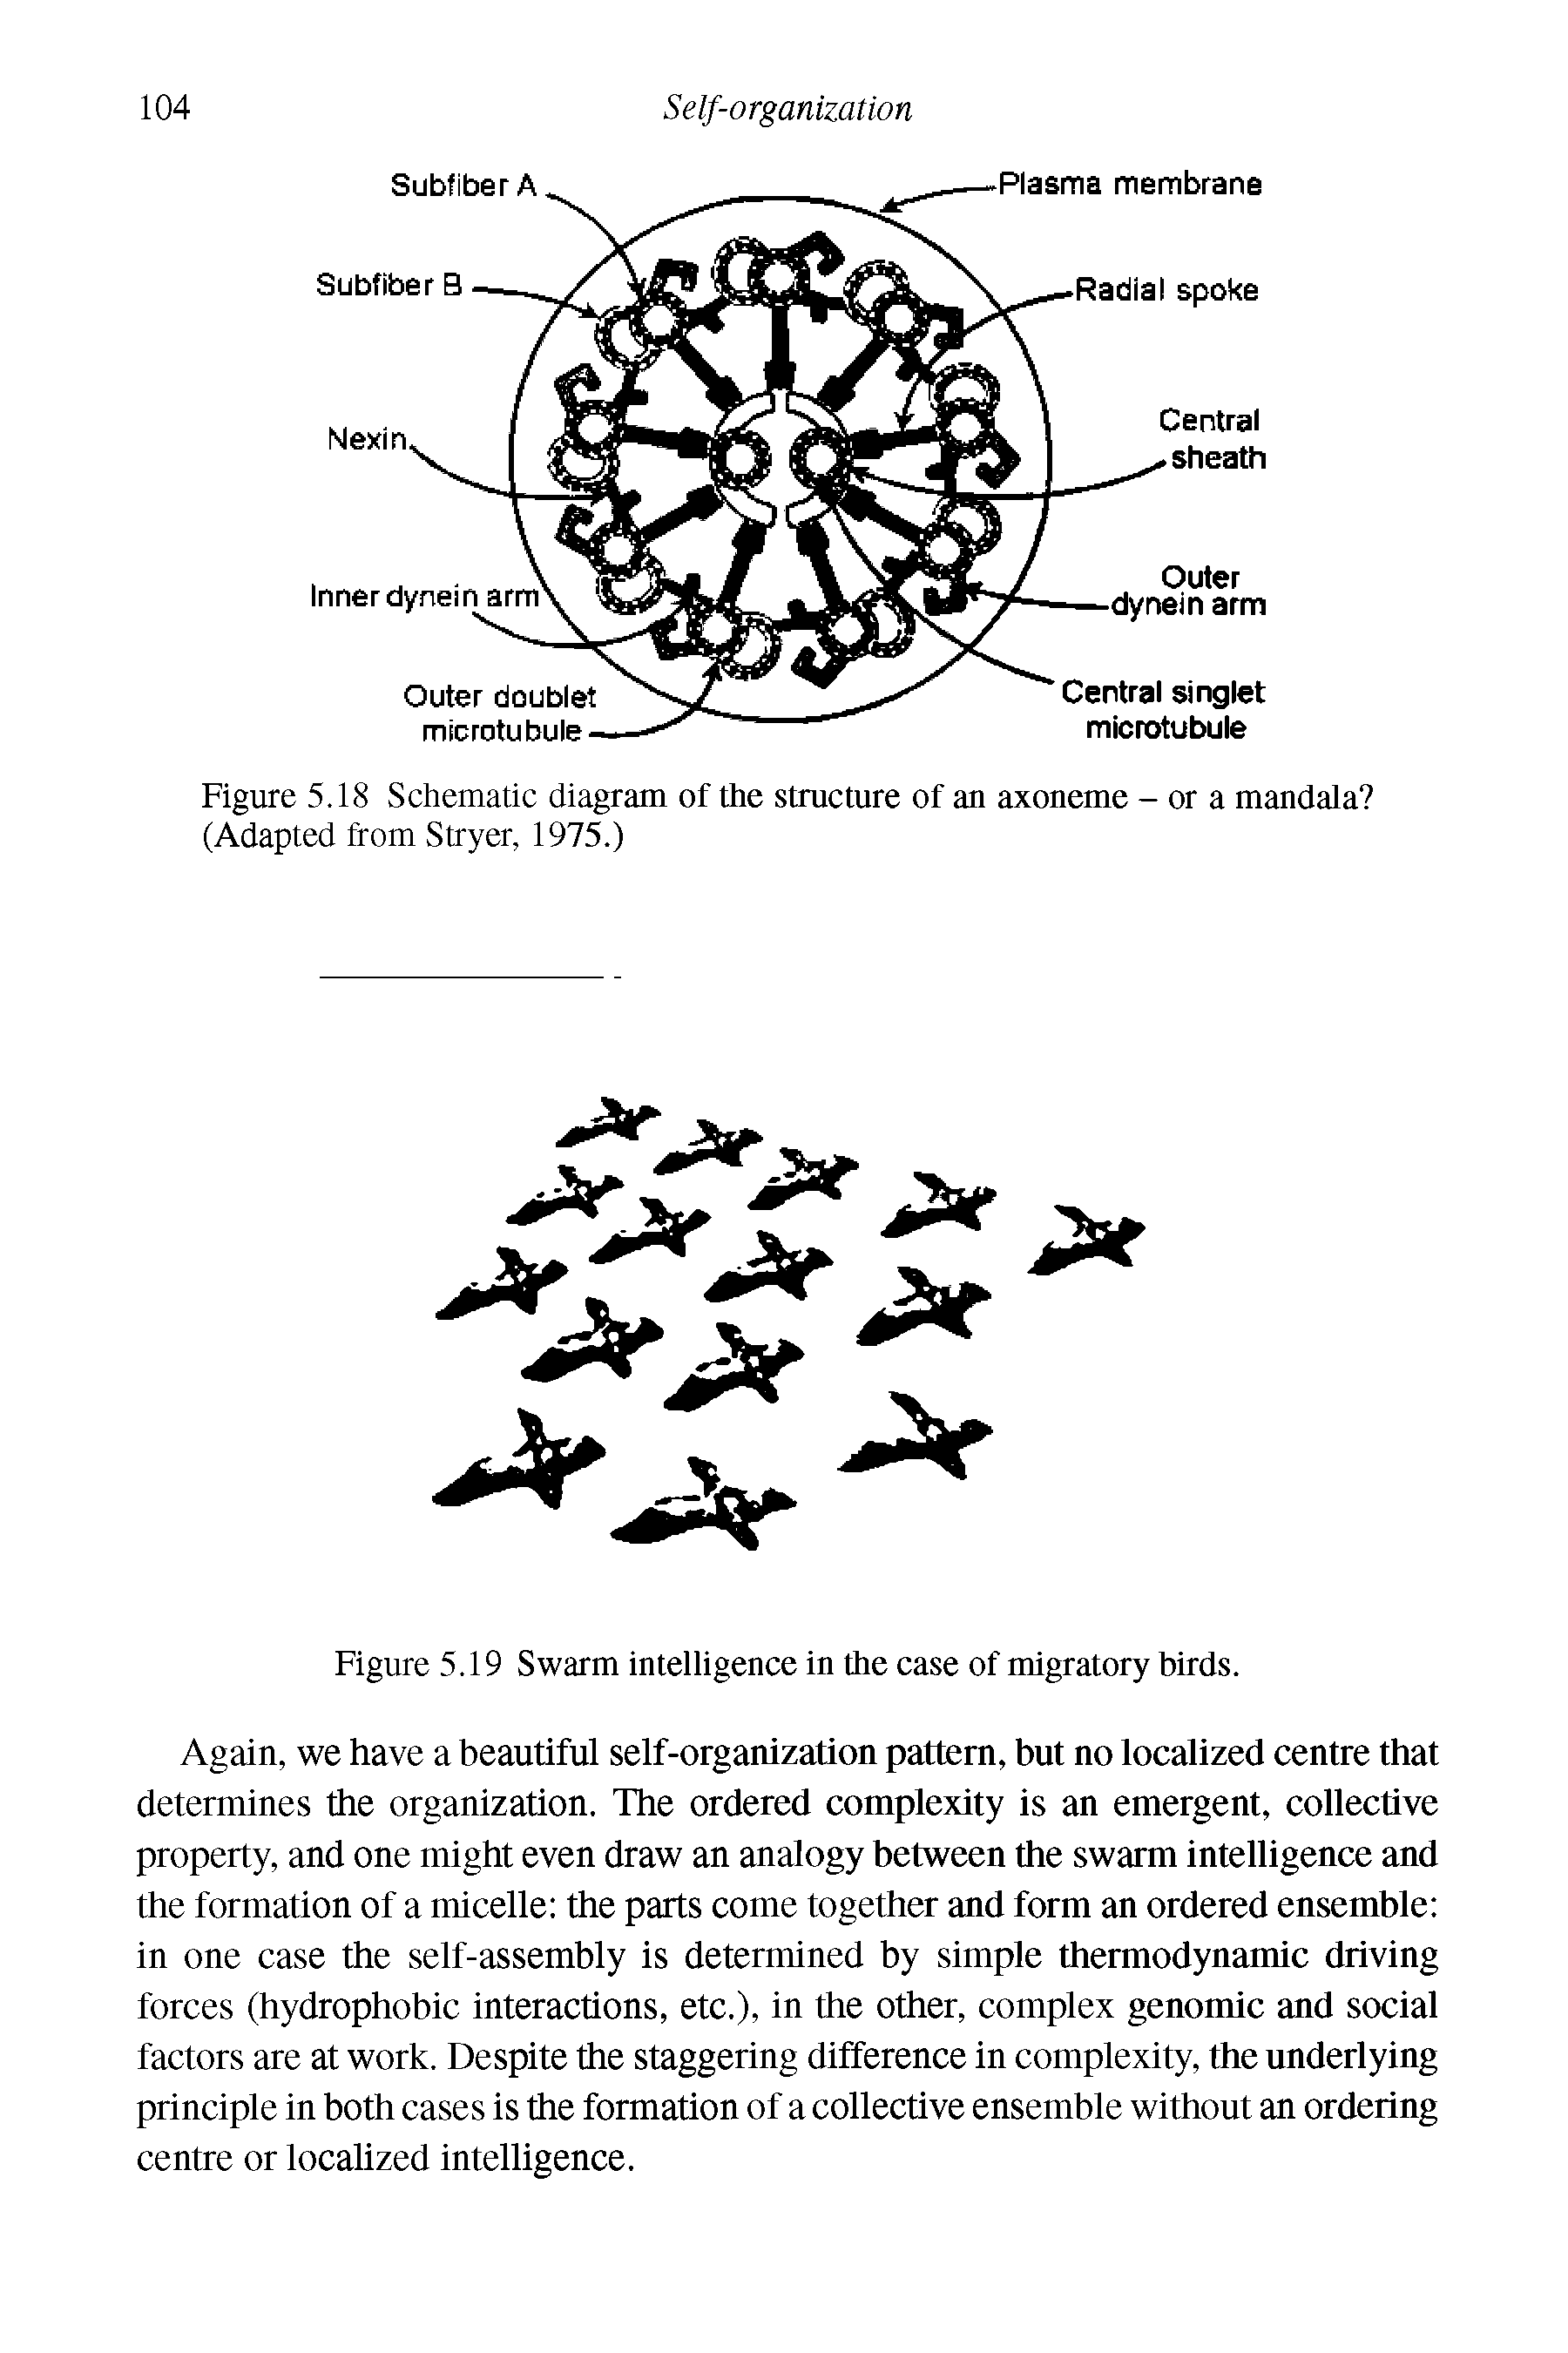 Figure 5.19 Swarm intelligence in the case of migratory birds.